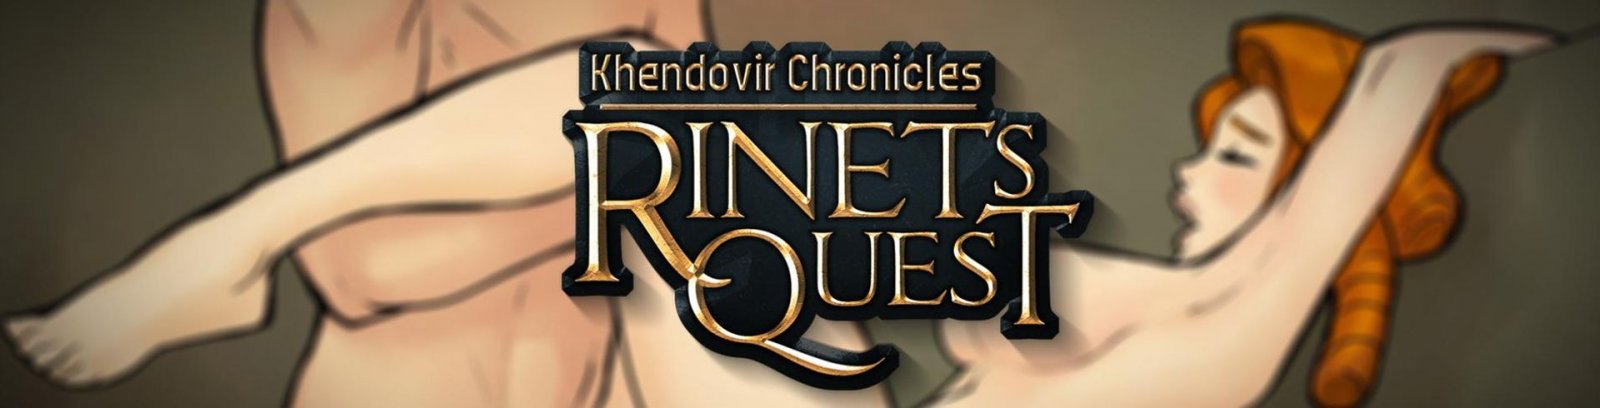 Khendovir Chronicles1.jpeg